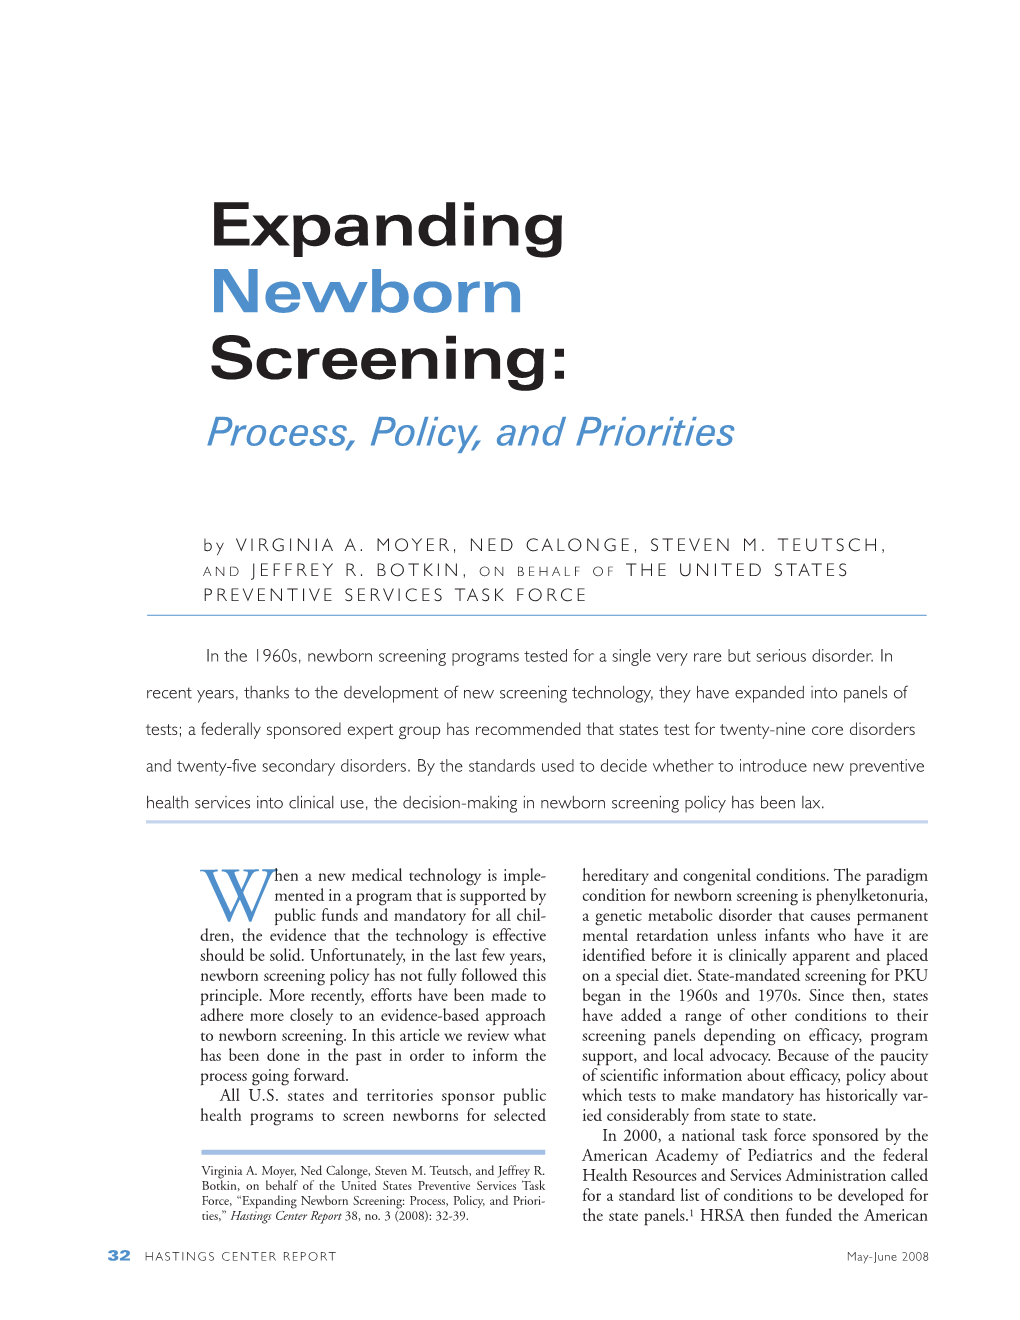 Expanding Newborn Screening: Process, Policy, and Priorities